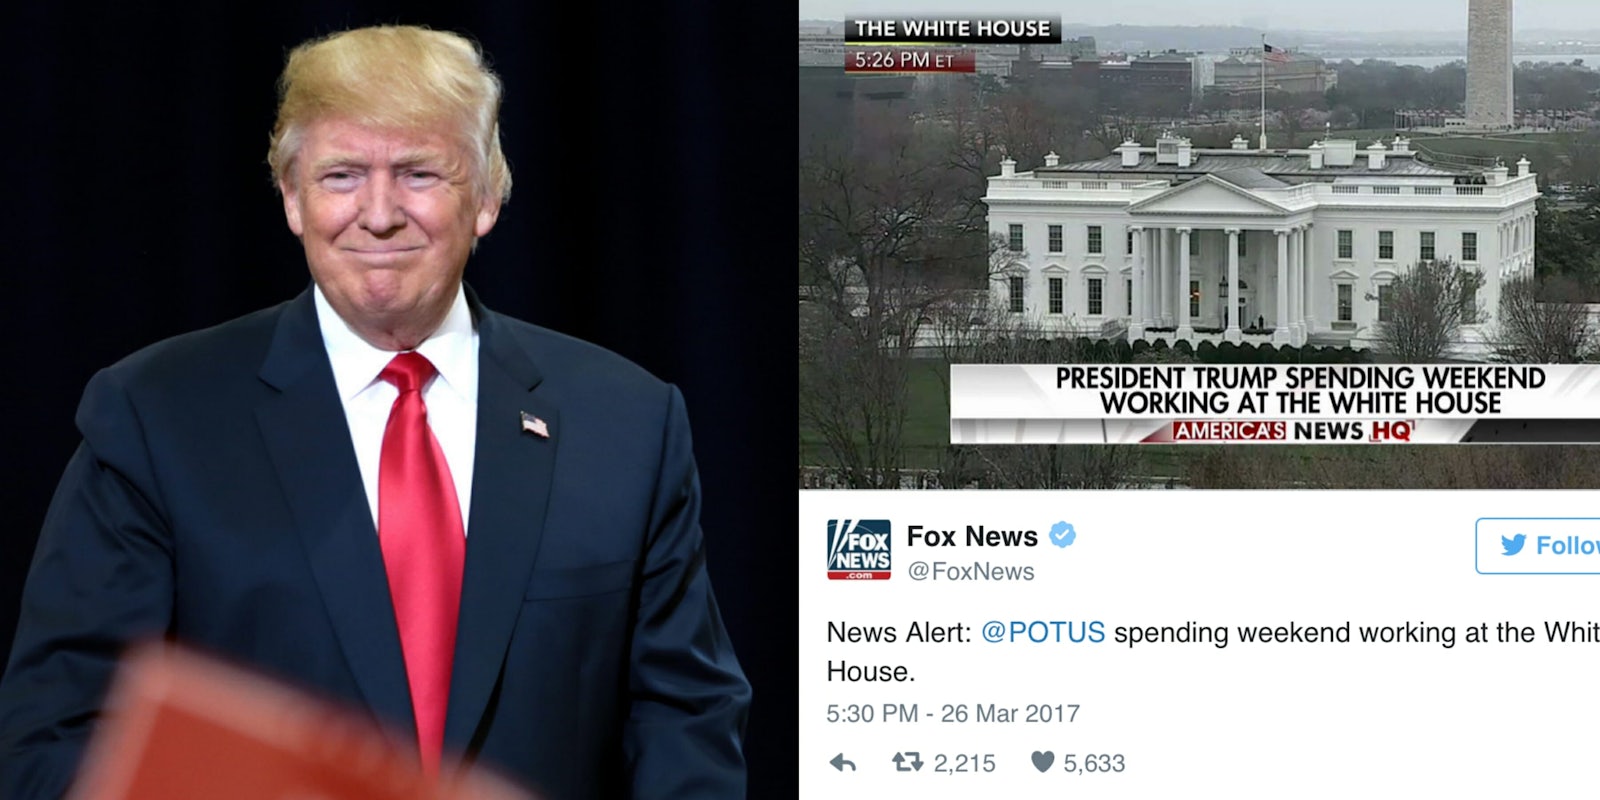 Donald Trump Beside Misleading Fox News Tweet